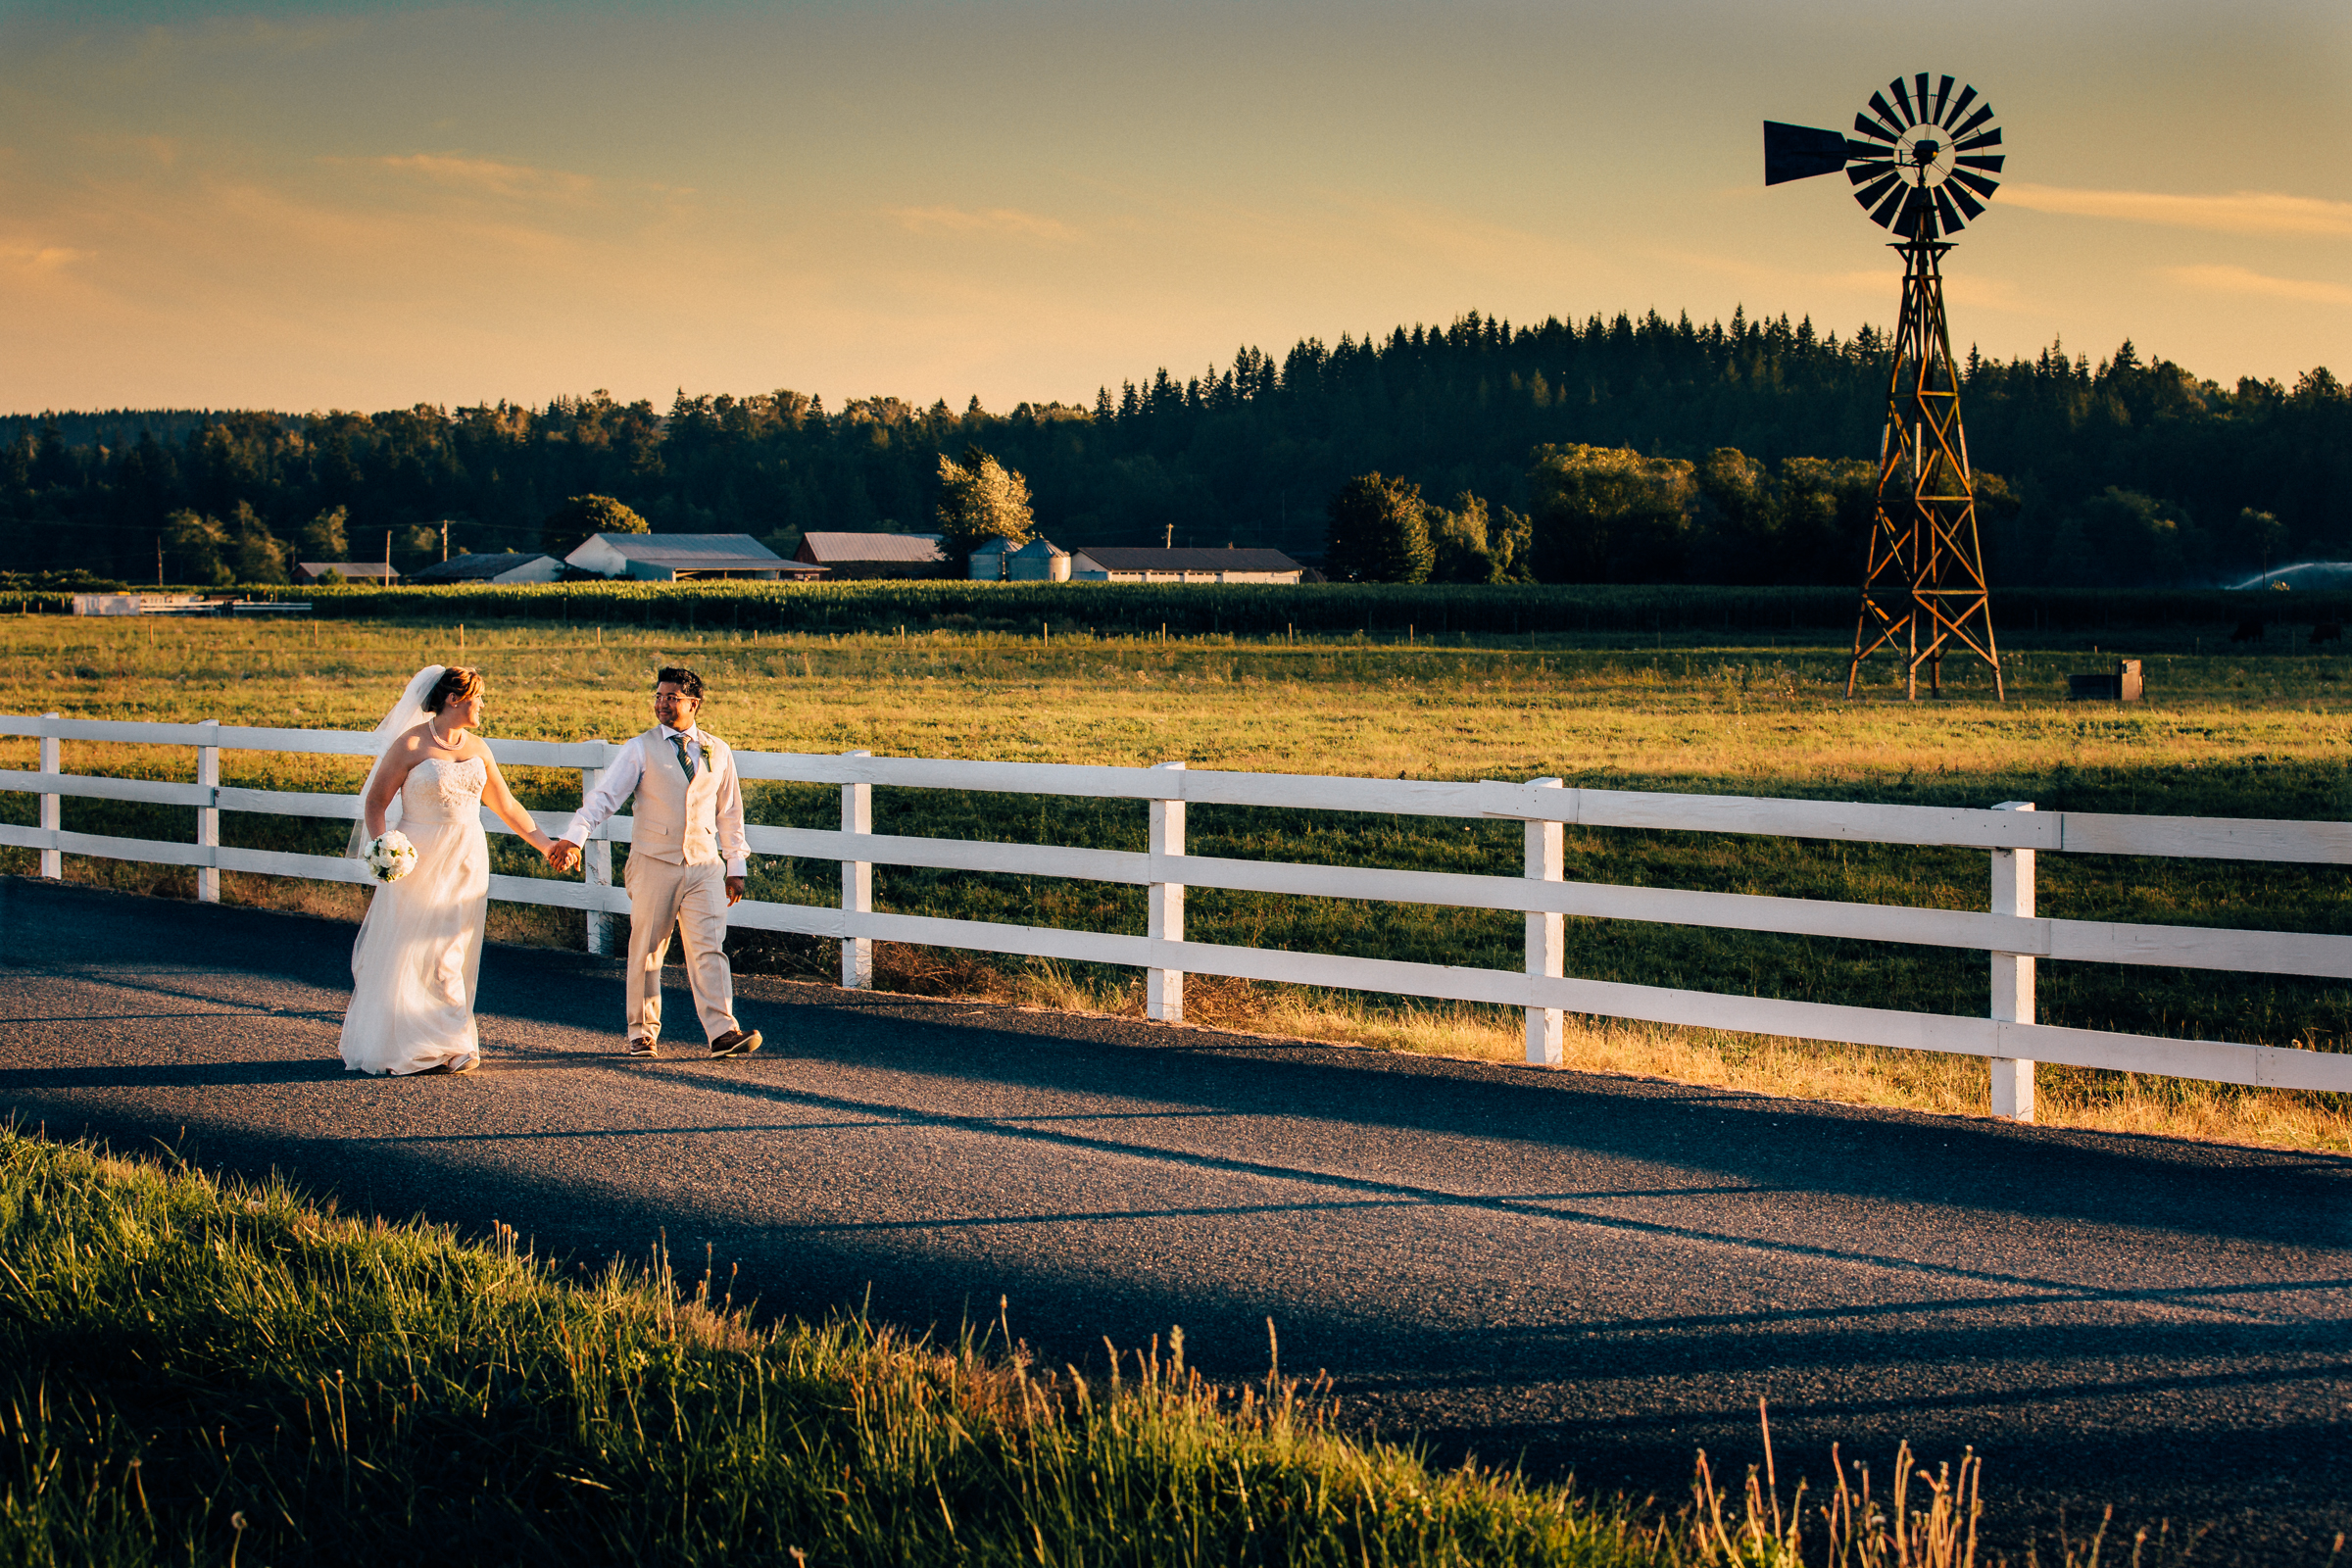 Arlington Washington wedding, windmill and Stilly Brook Farm at sunset